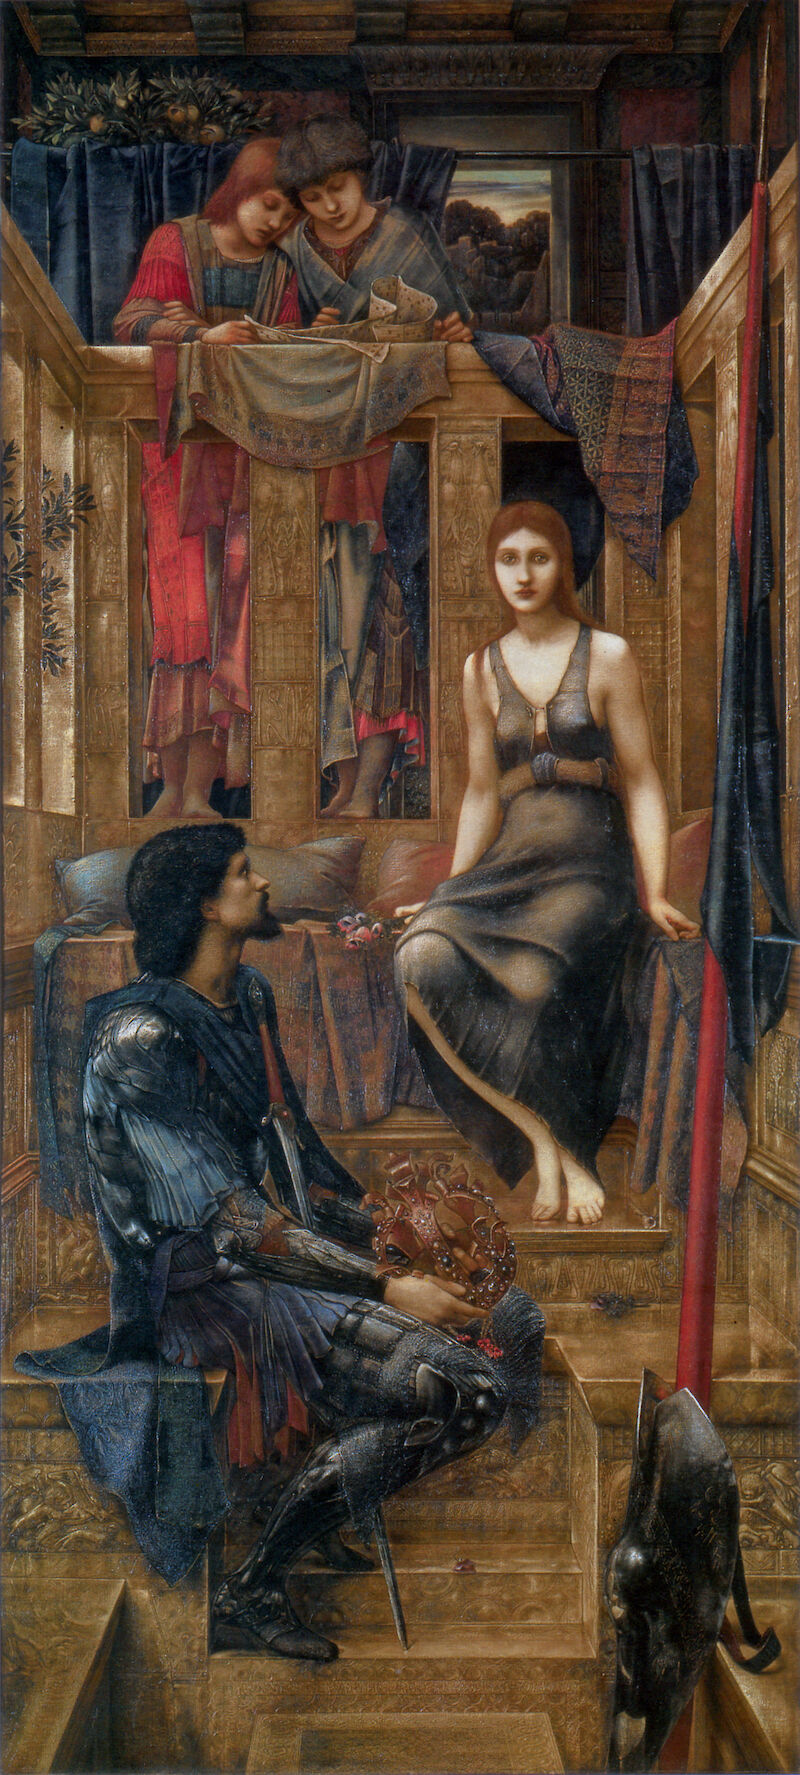 King Cophetua and the Beggar Maid, Edward Burne-Jones